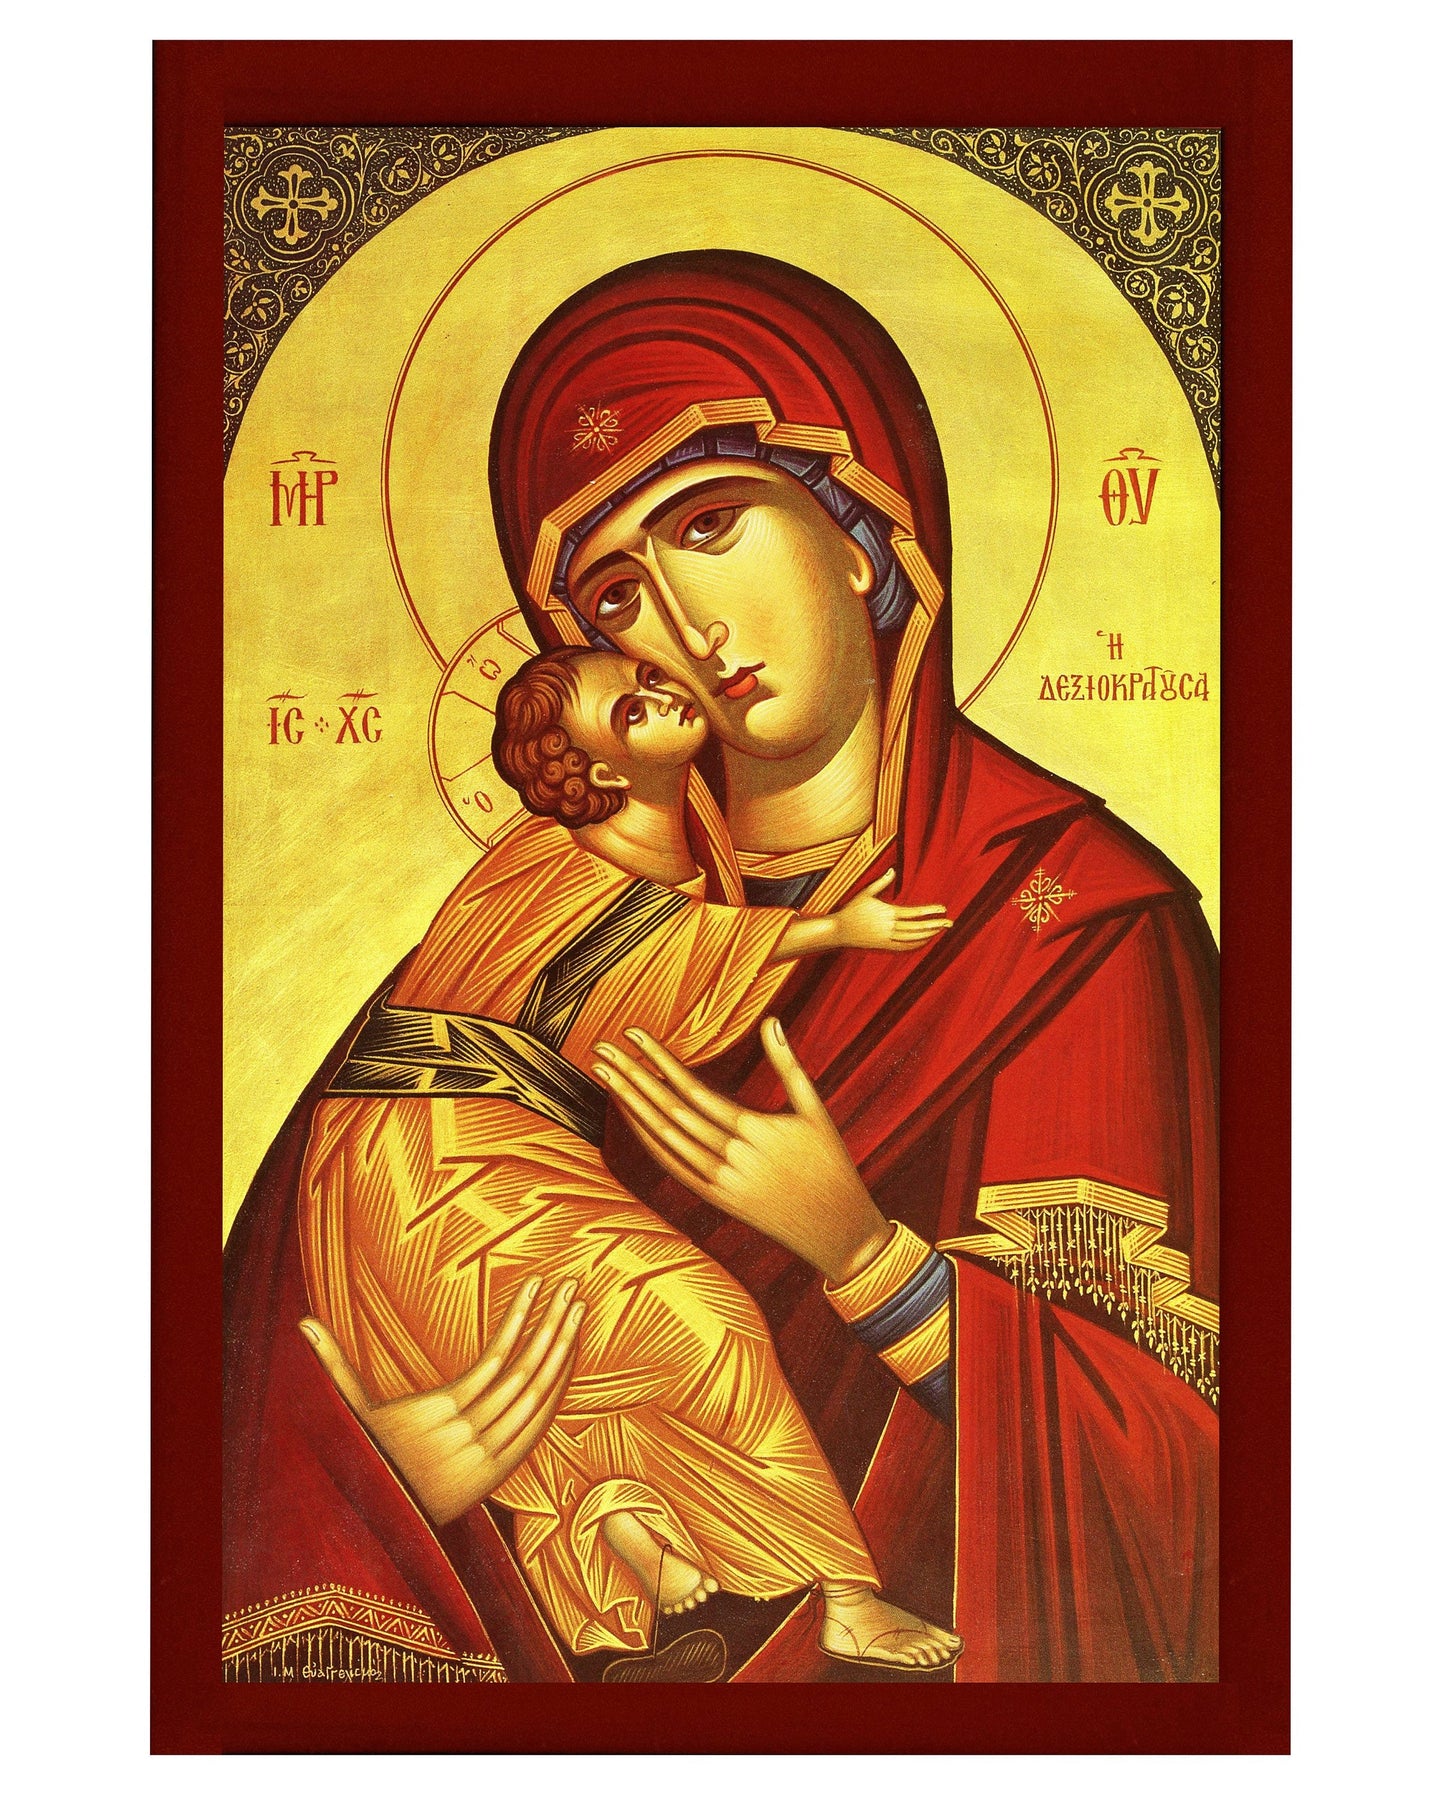 Virgin Mary icon Panagia Dexiokratoussa, Handmade Greek Orthodox Icon, Mother of God Byzantine art, Theotokos wall hanging wood plaque TheHolyArt